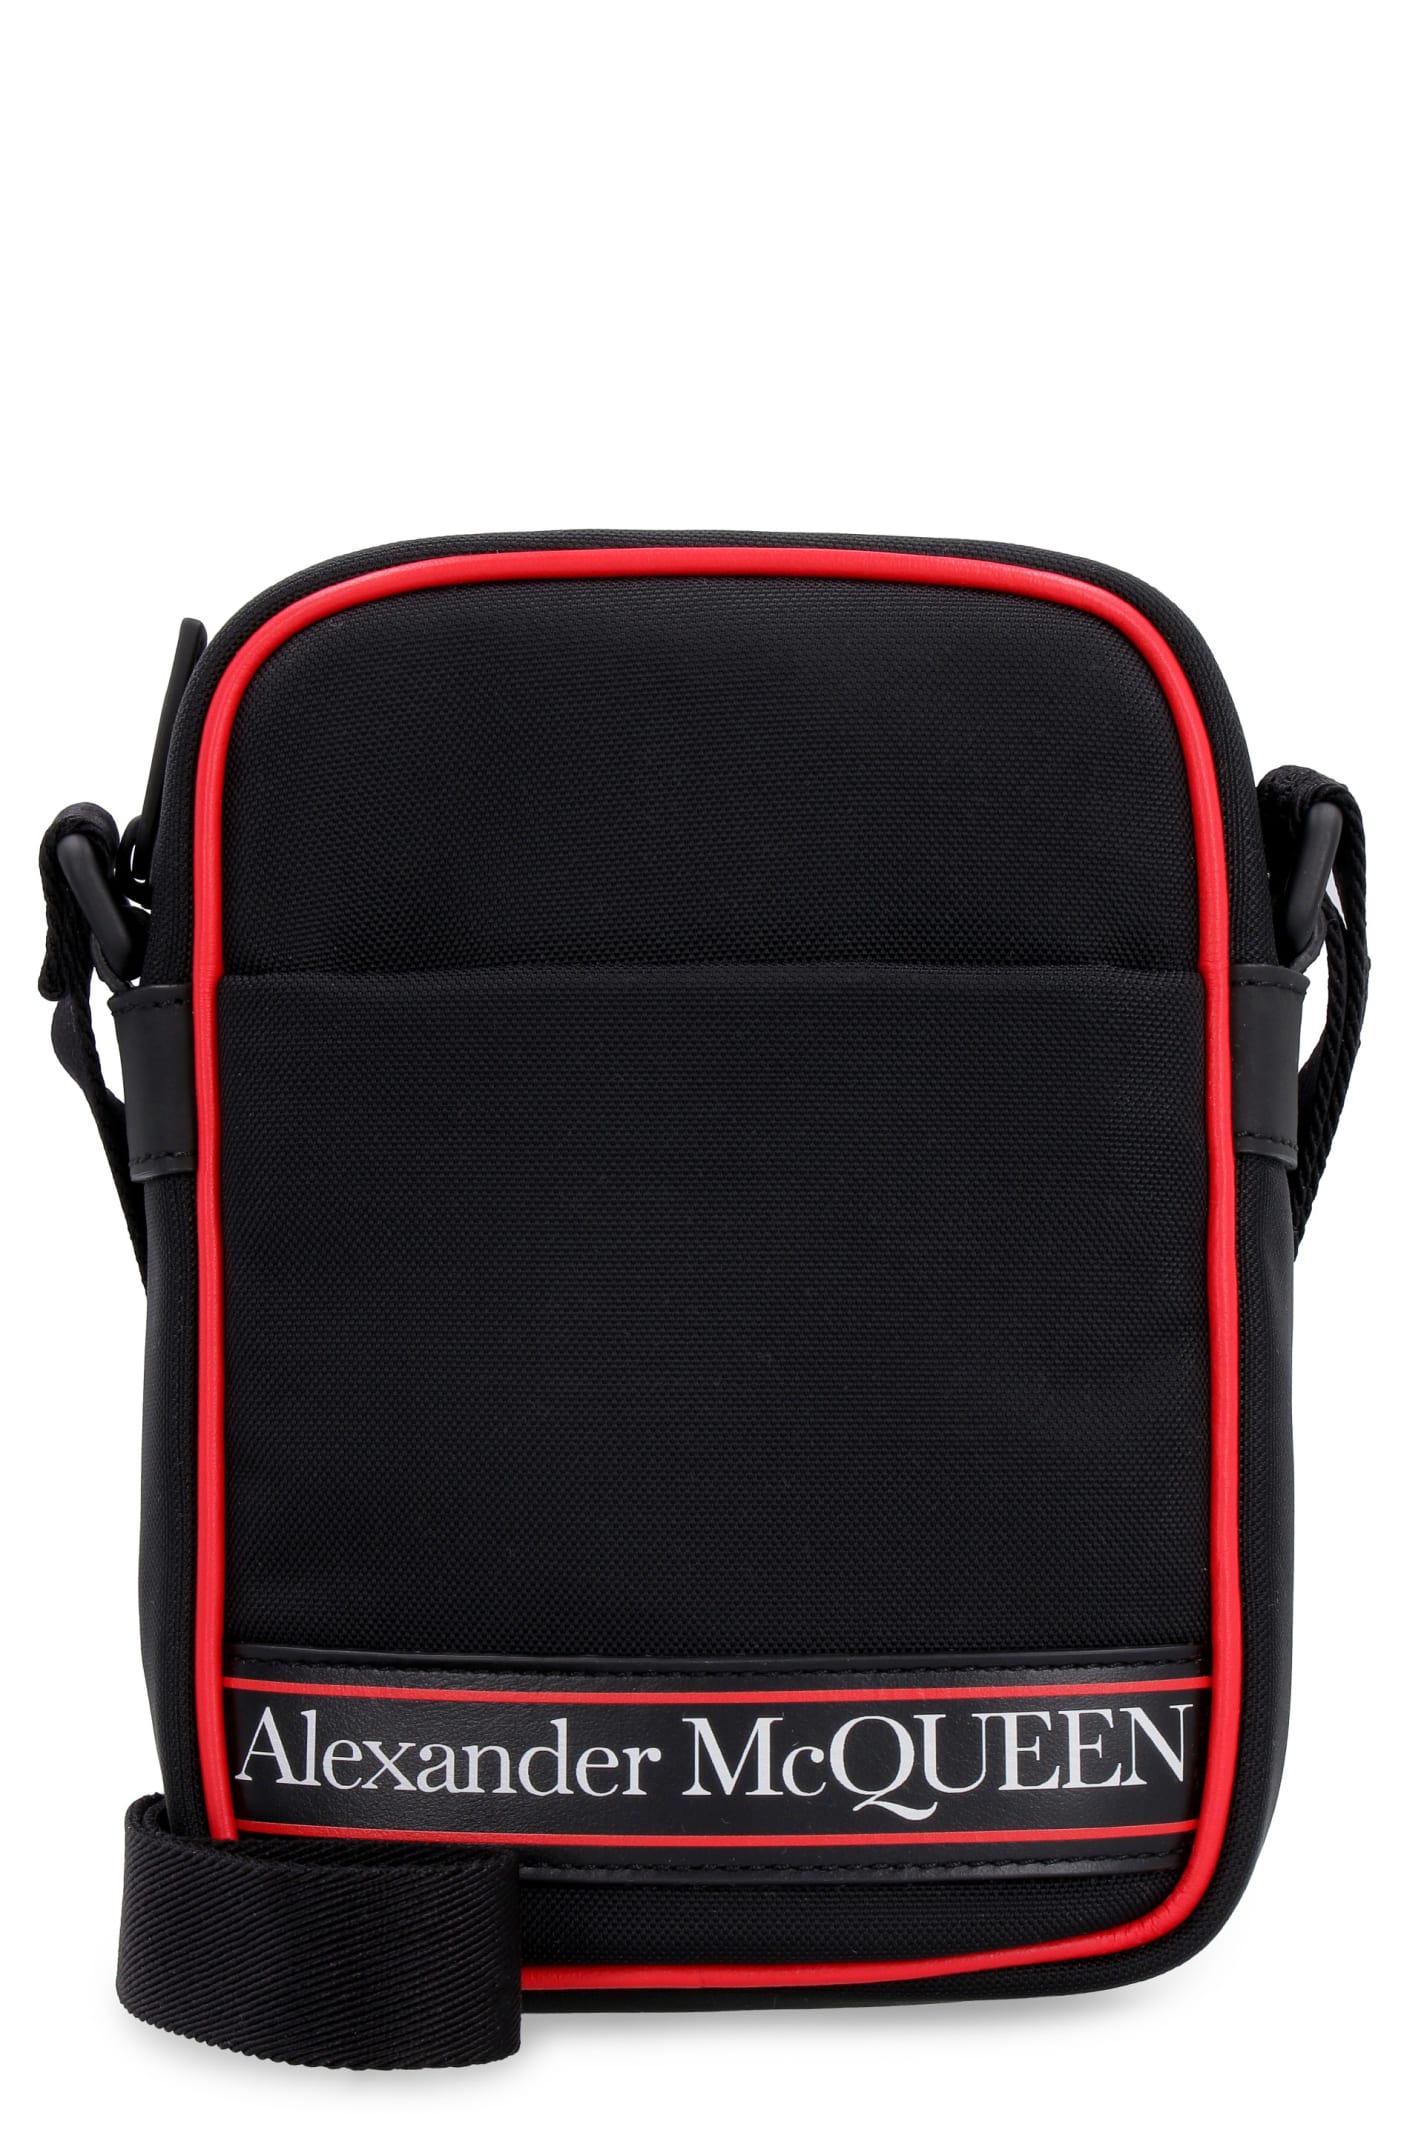 Alexander McQueen Nylon Messenger Bag